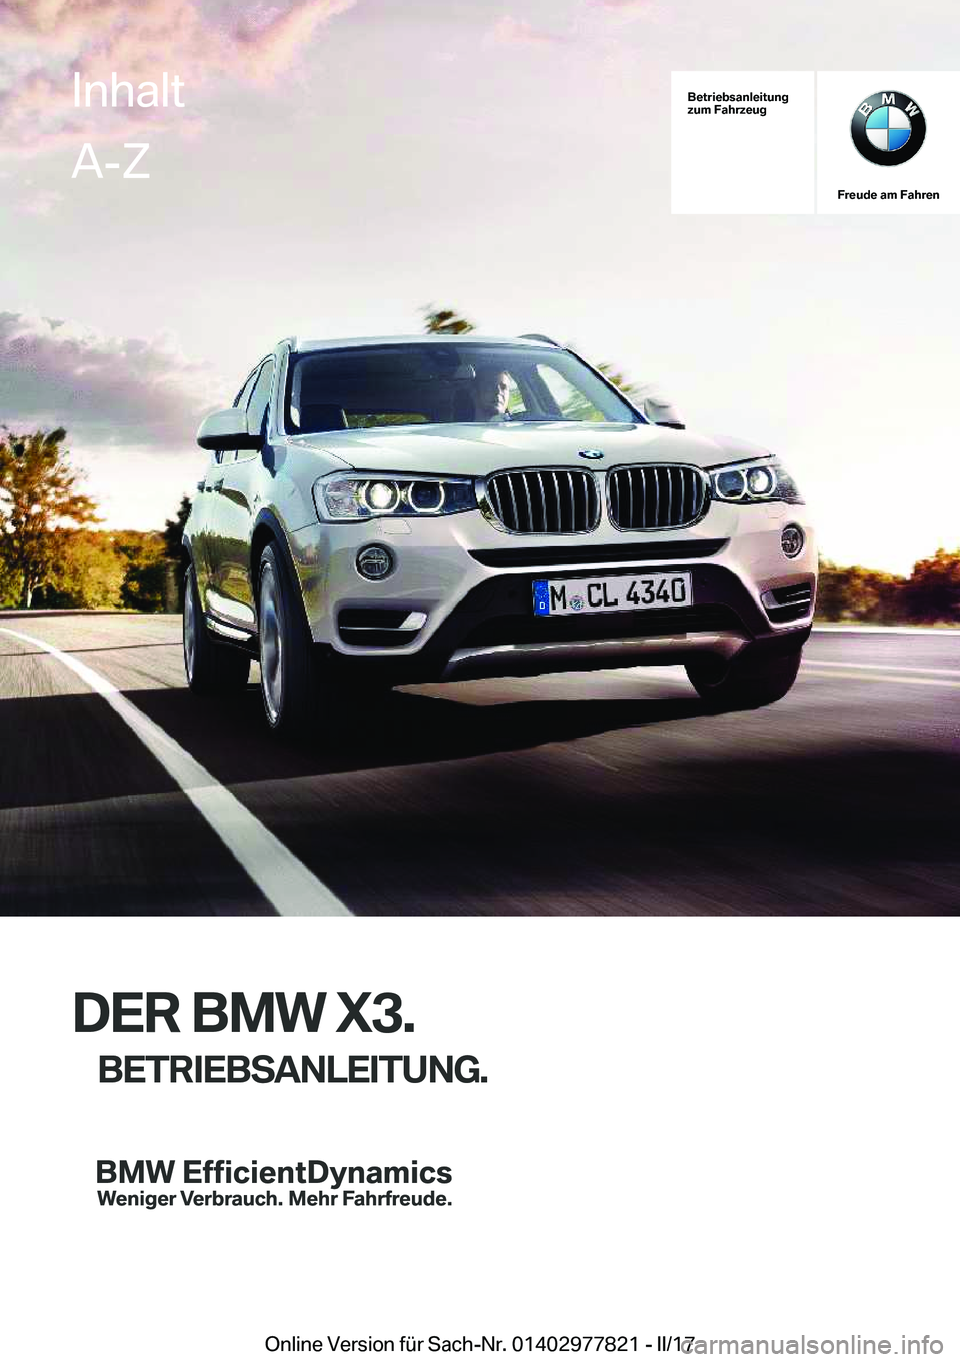 BMW X3 2017  Betriebsanleitungen (in German) �B�e�t�r�i�e�b�s�a�n�l�e�i�t�u�n�g
�z�u�m��F�a�h�r�z�e�u�g
�F�r�e�u�d�e��a�m��F�a�h�r�e�n
�D�E�R��B�M�W��X�3�.
�B�E�T�R�I�E�B�S�A�N�L�E�I�T�U�N�G�.
�I�n�h�a�l�t�A�-�Z
�O�n�l�i�n�e� �V�e�r�s�i�o�n